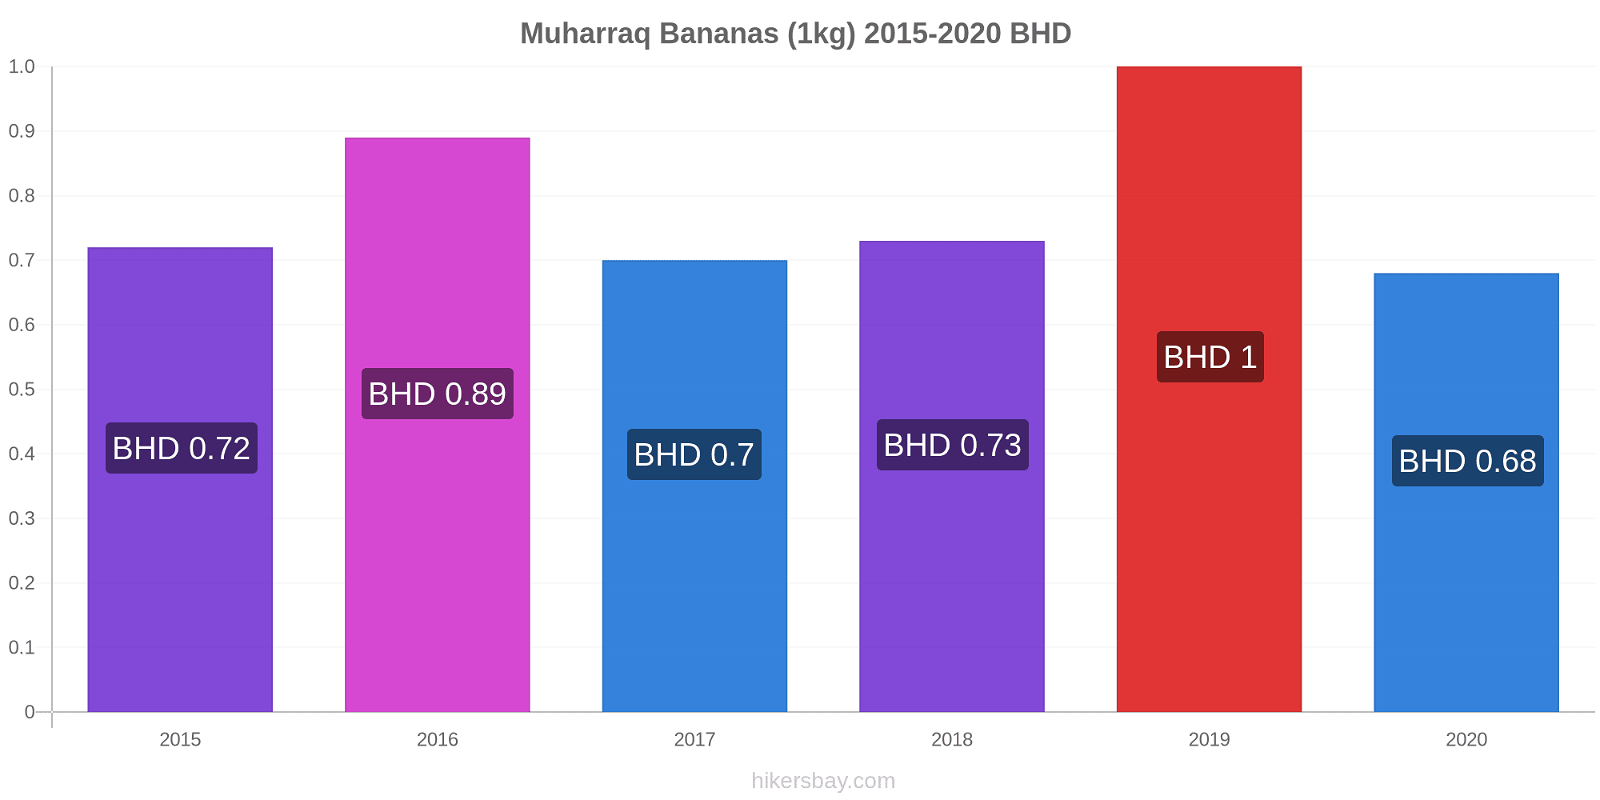 Muharraq price changes Bananas (1kg) hikersbay.com